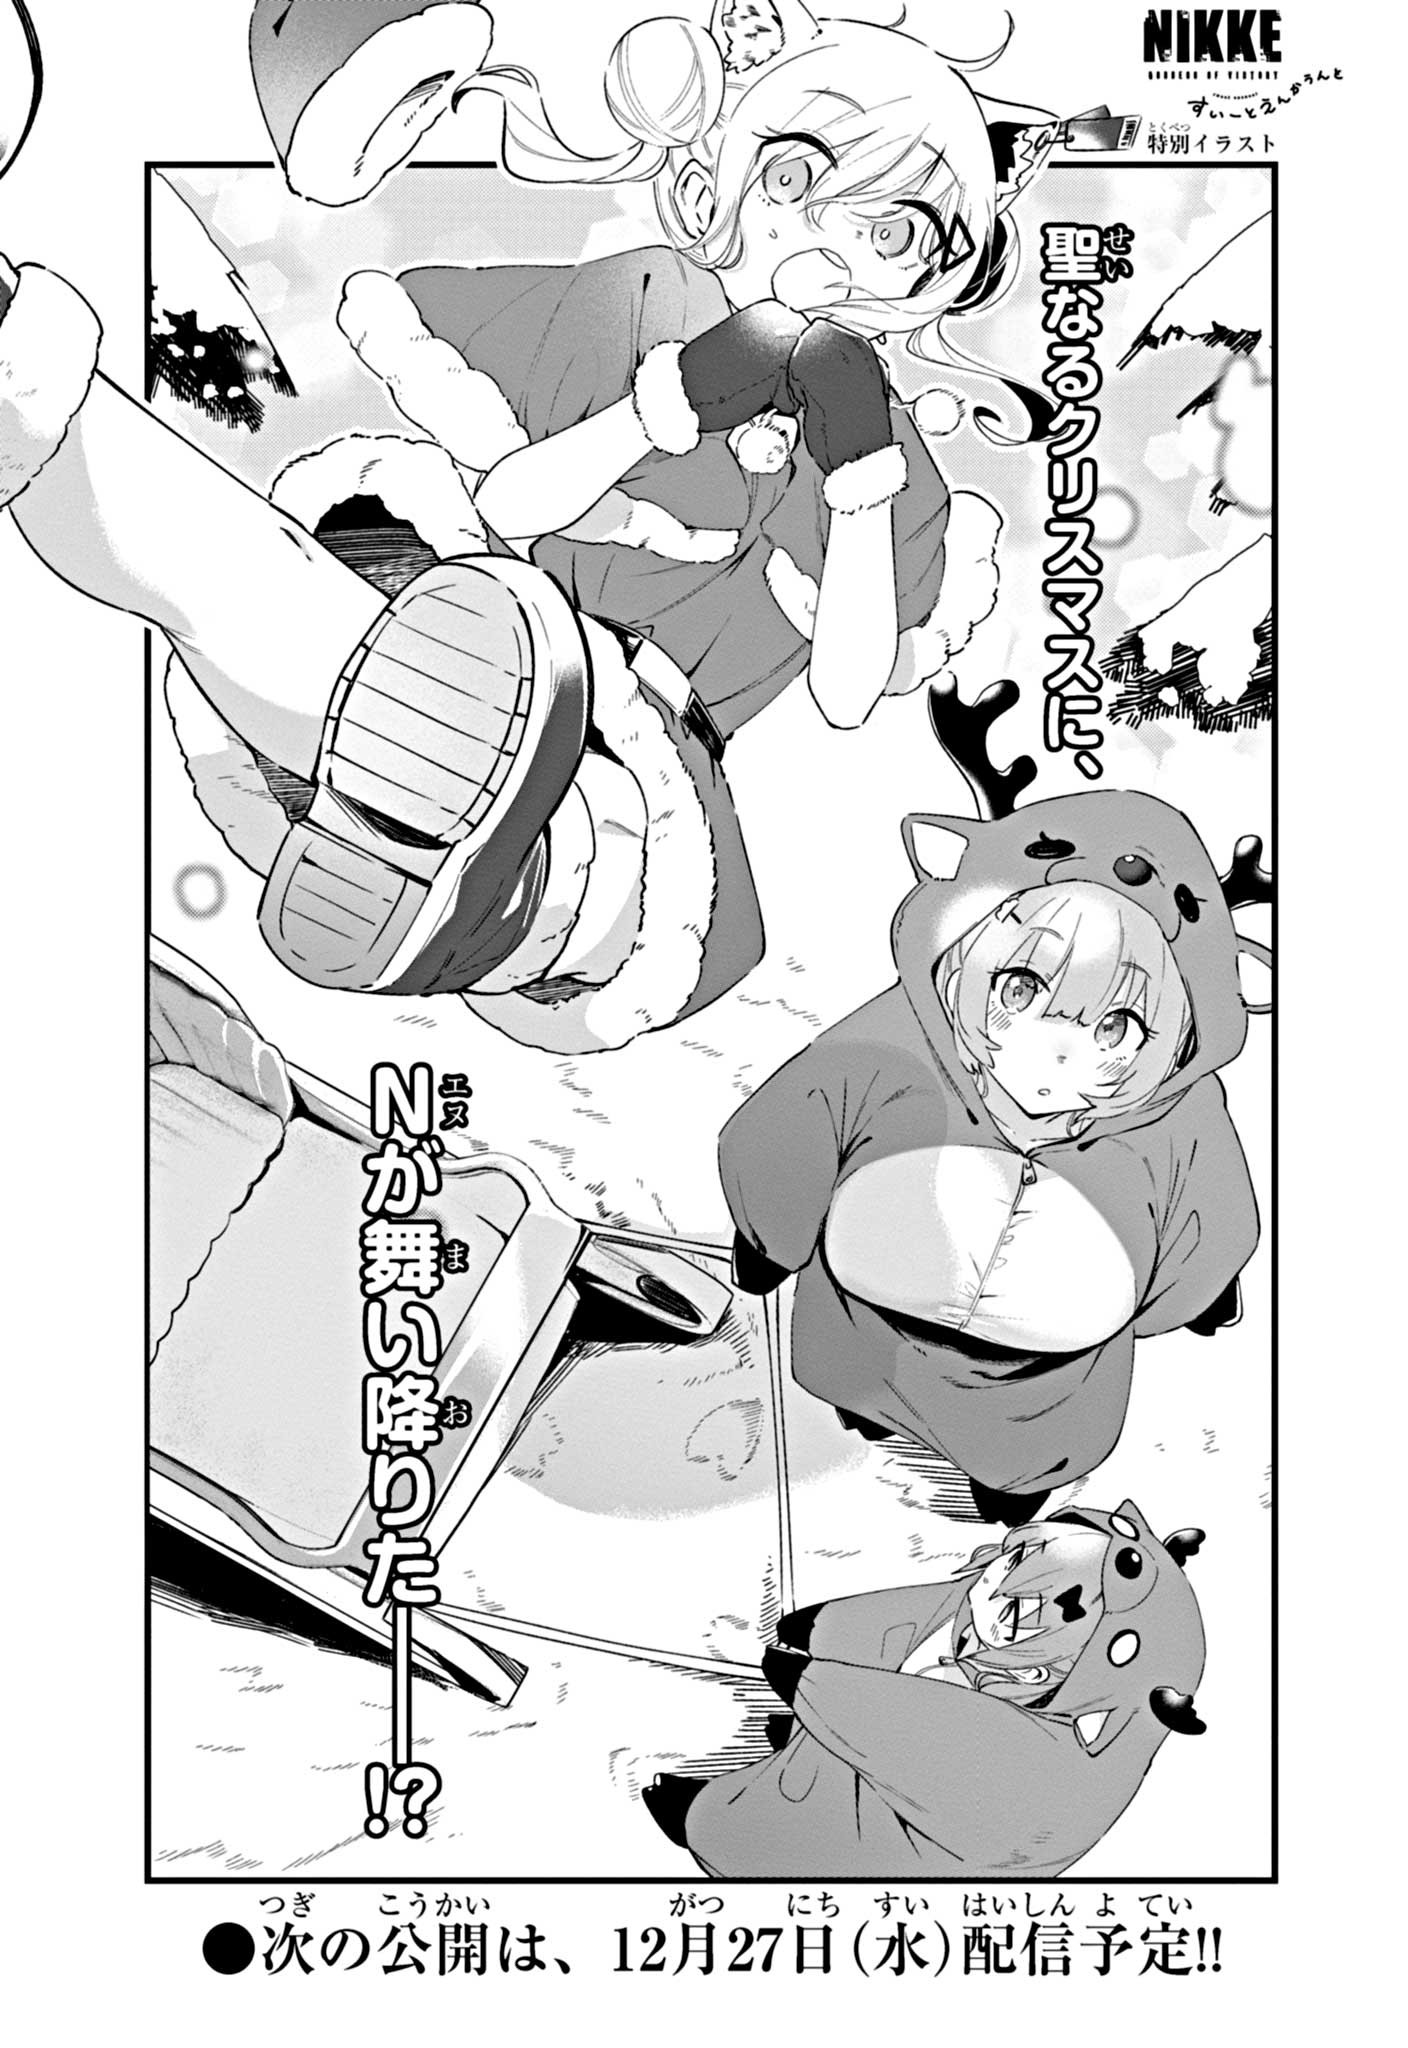 Shouri no Megami: Nikke – Sweet Encounter - Chapter 3.5 - Page 1